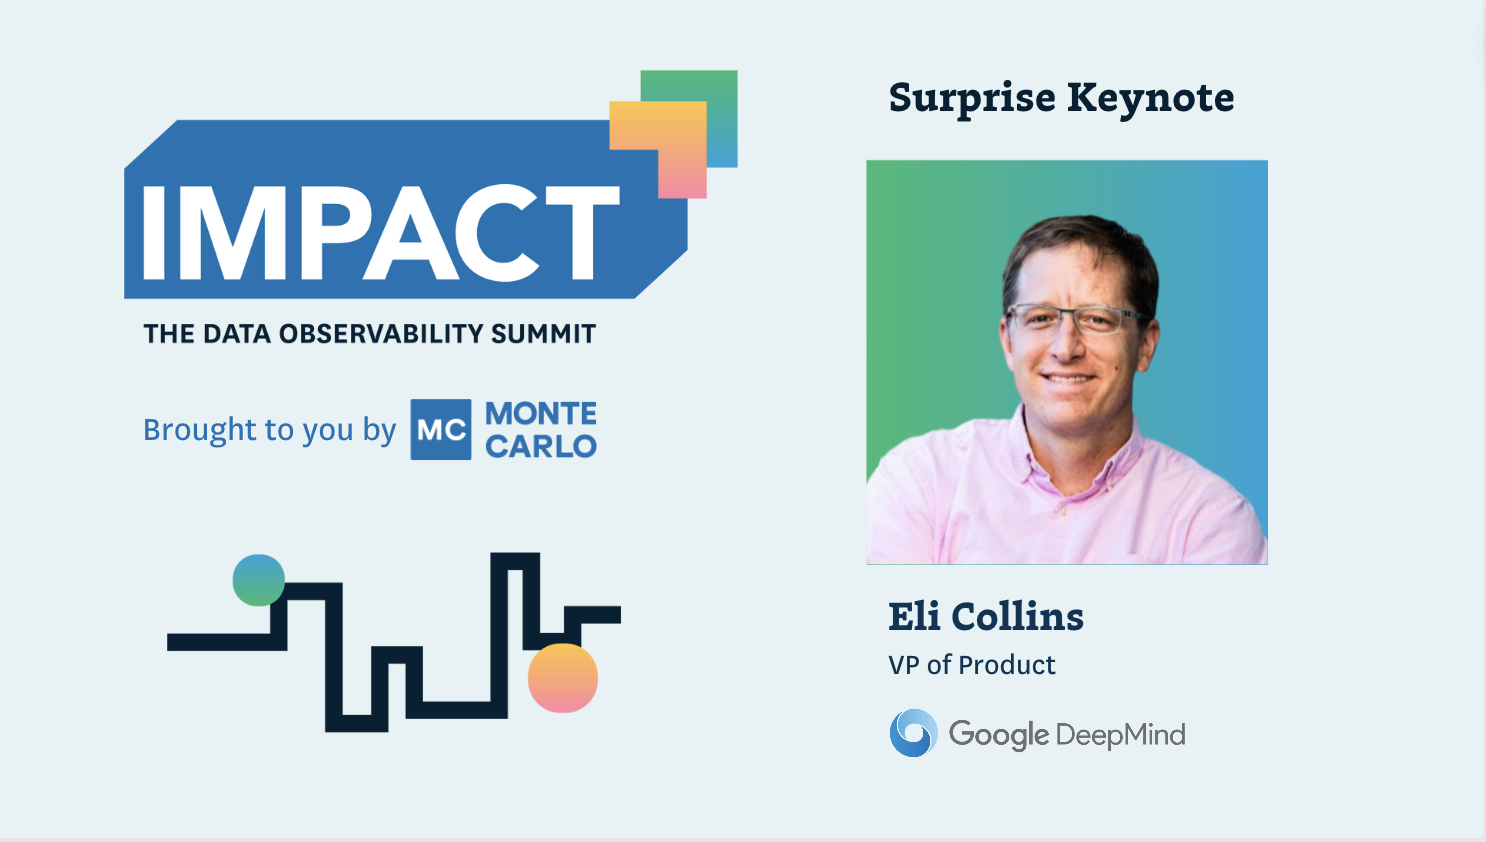 Google DeepMind’s Eli Collins to Headline IMPACT: The Data Observability Summit on November 8